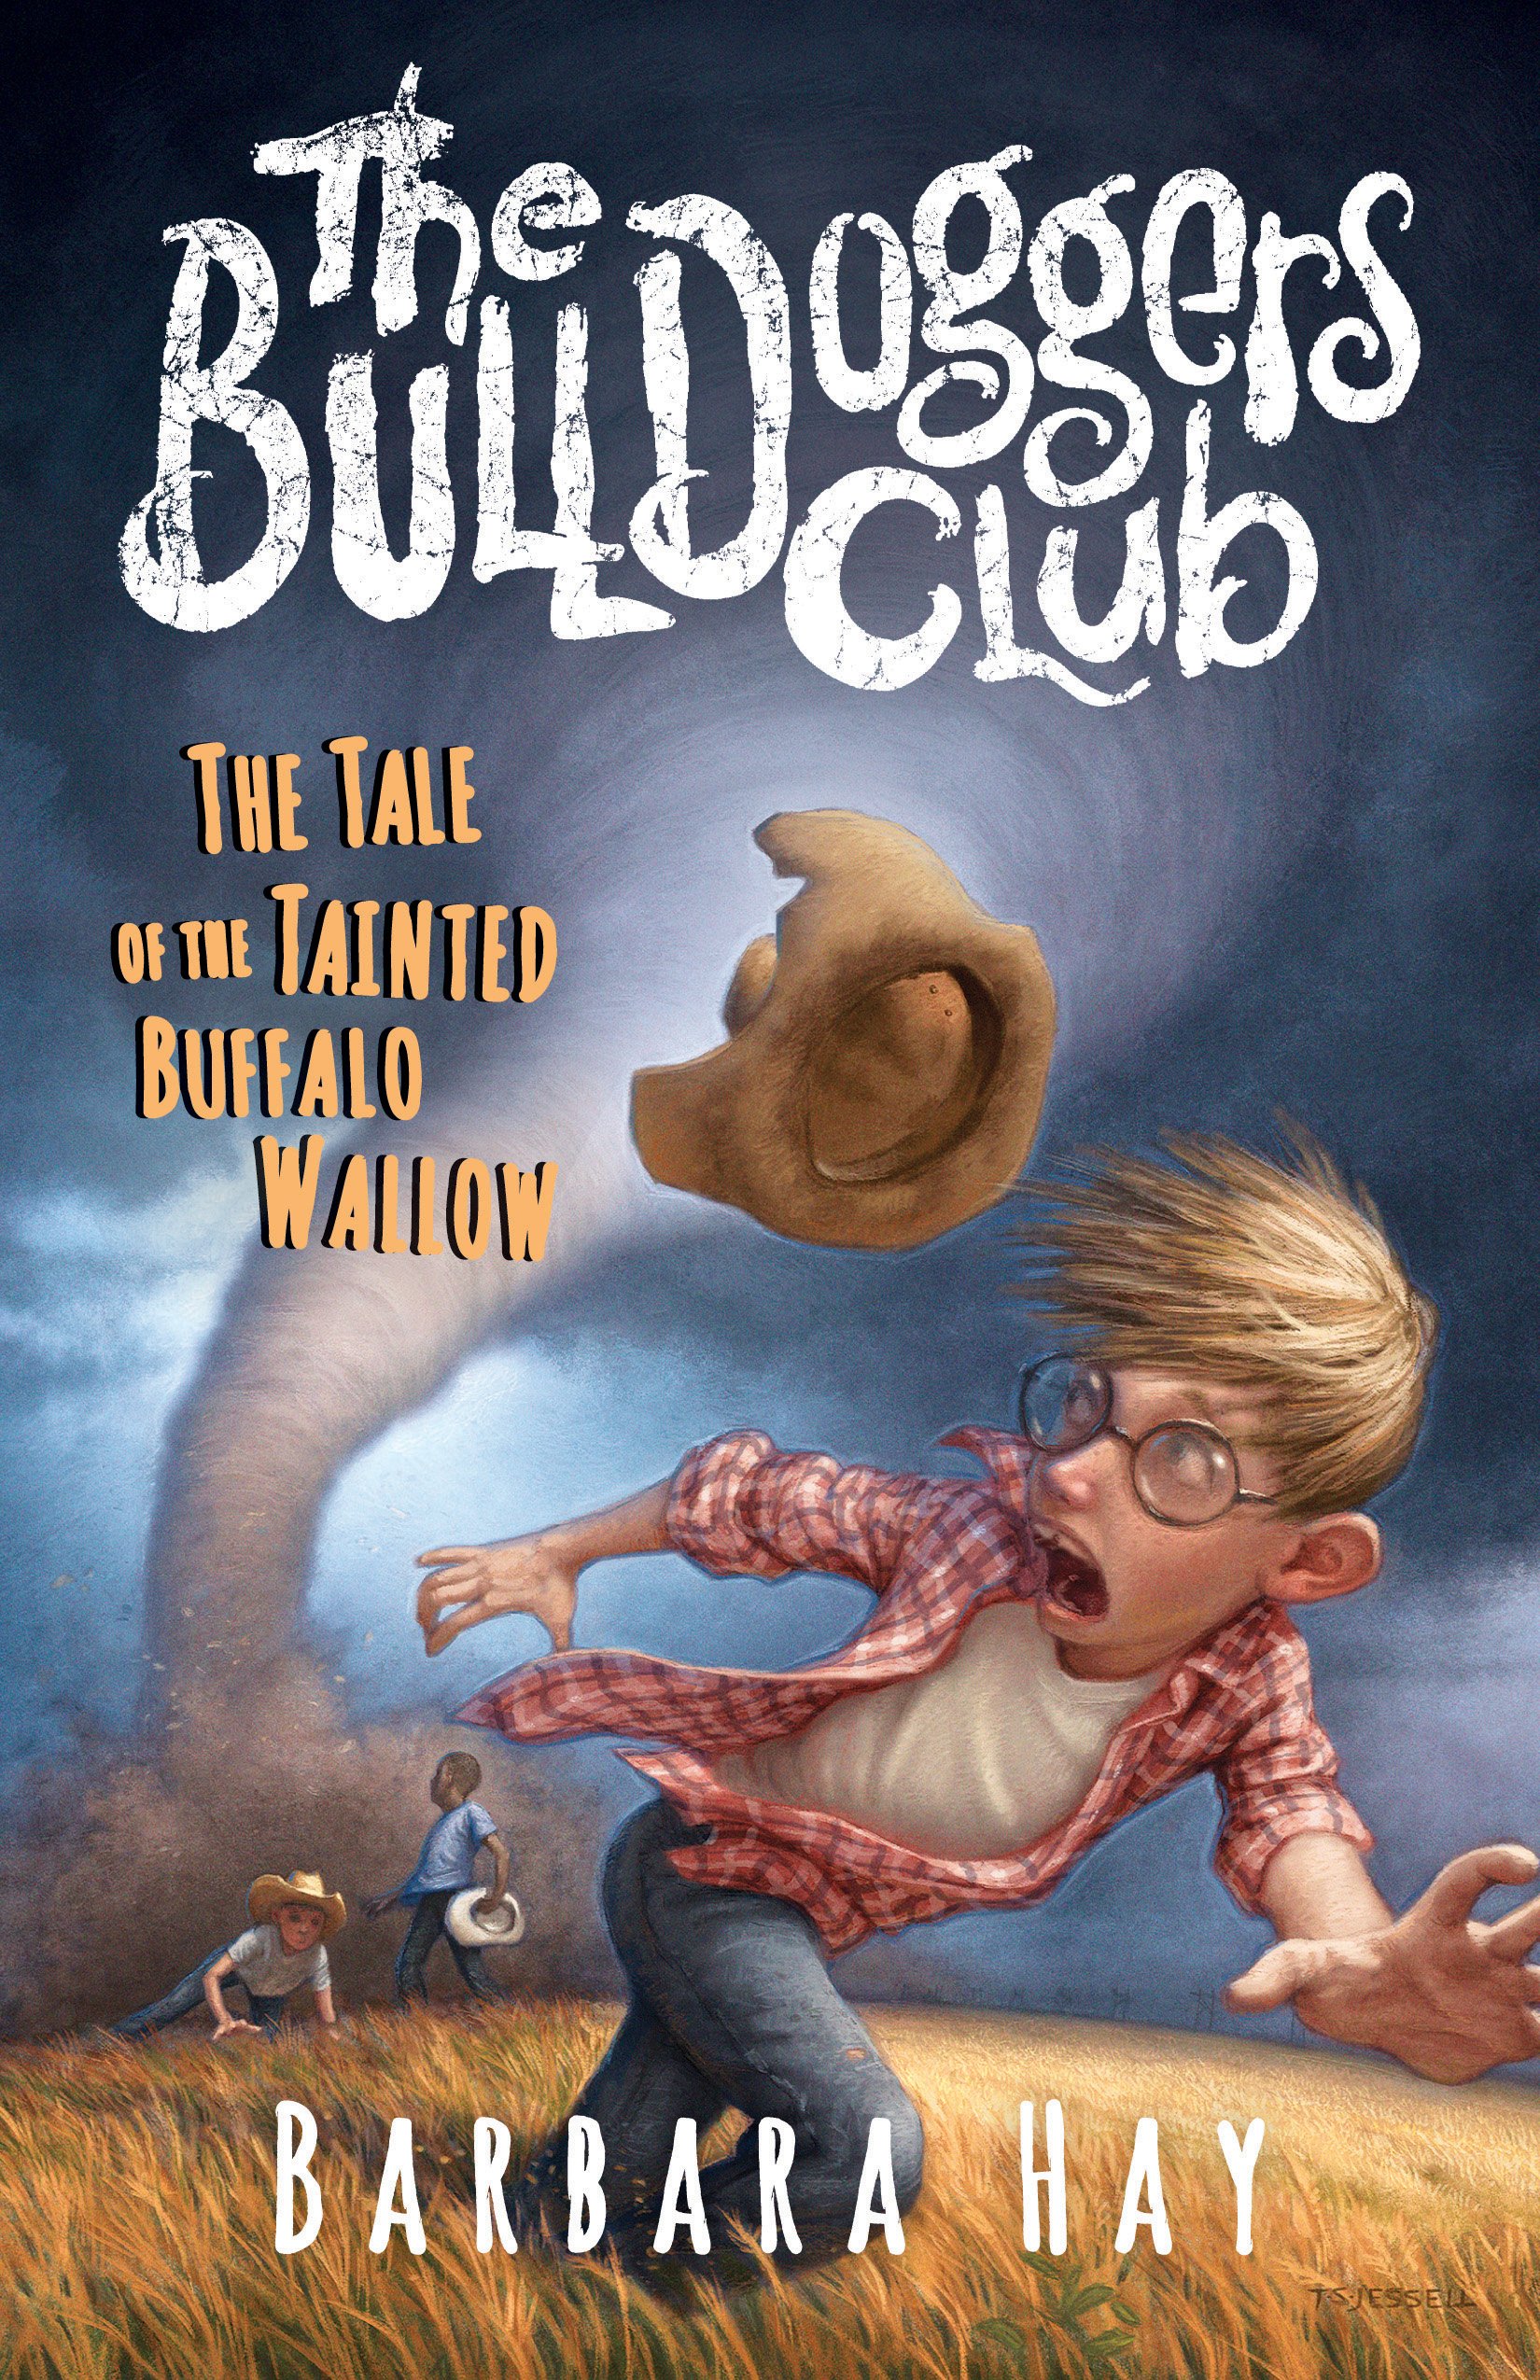 Bulldoggers Club—Tale of the Tainted Buffalo Wallow